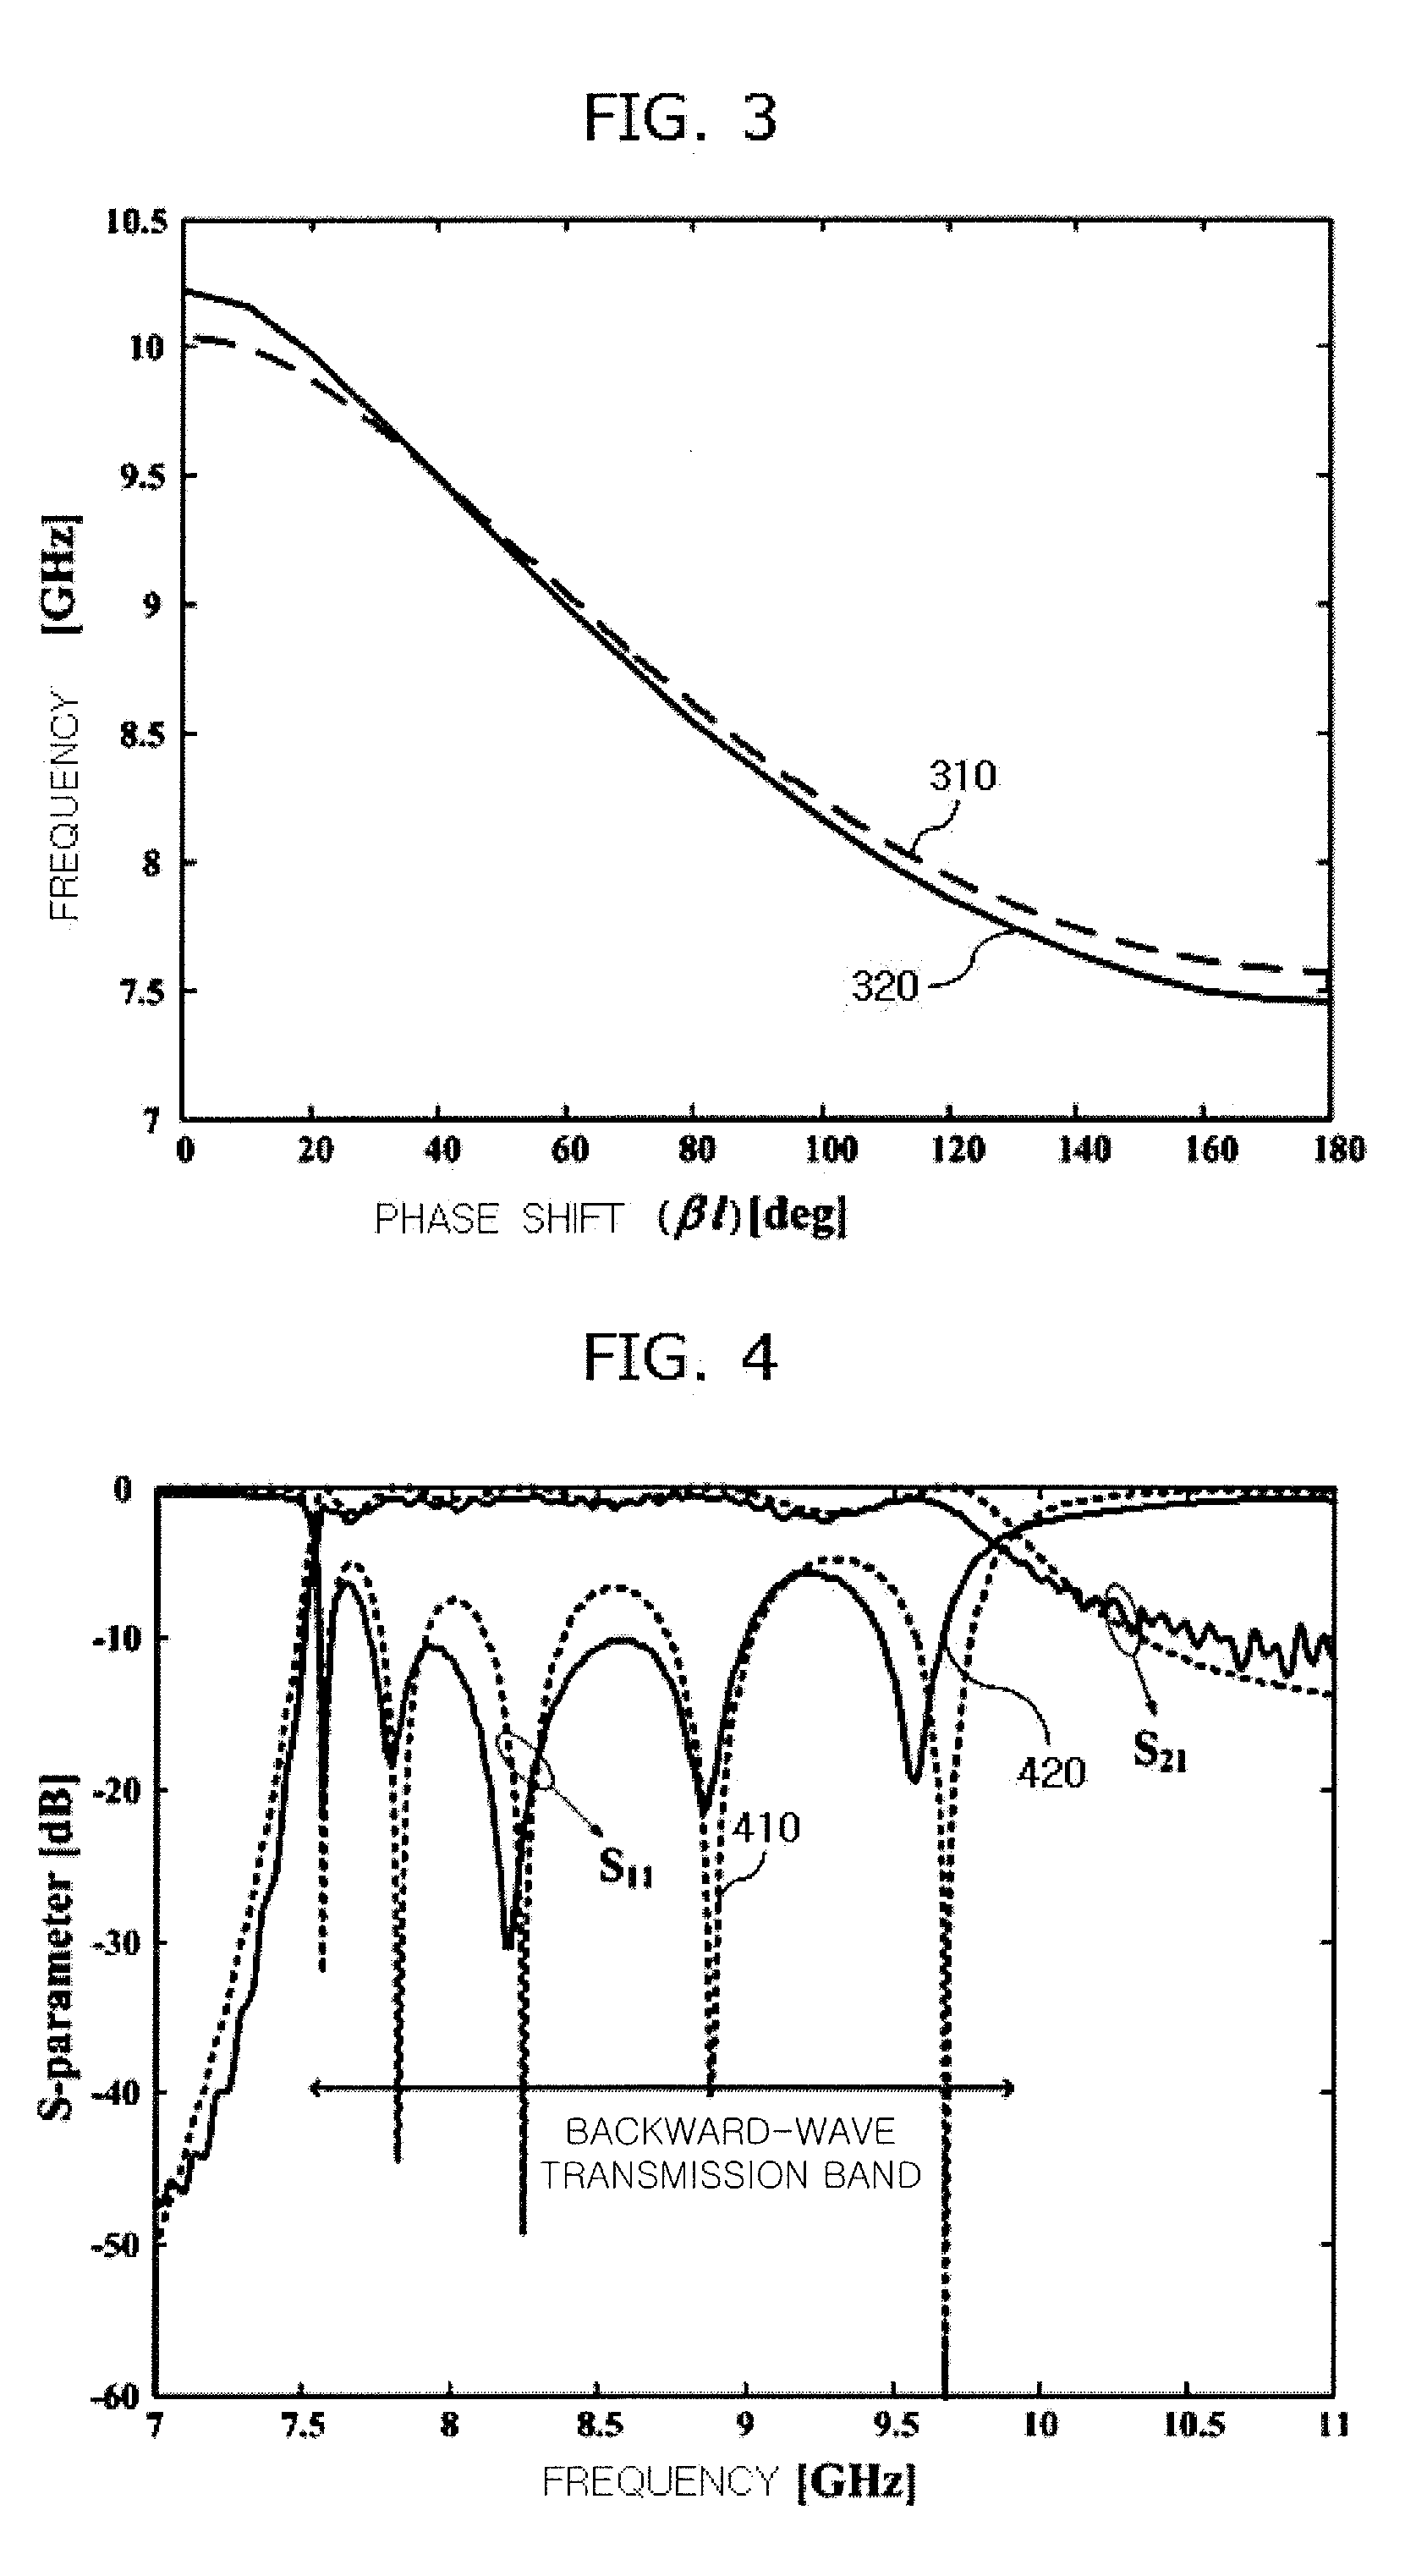 Backward-wave oscillator in communication system